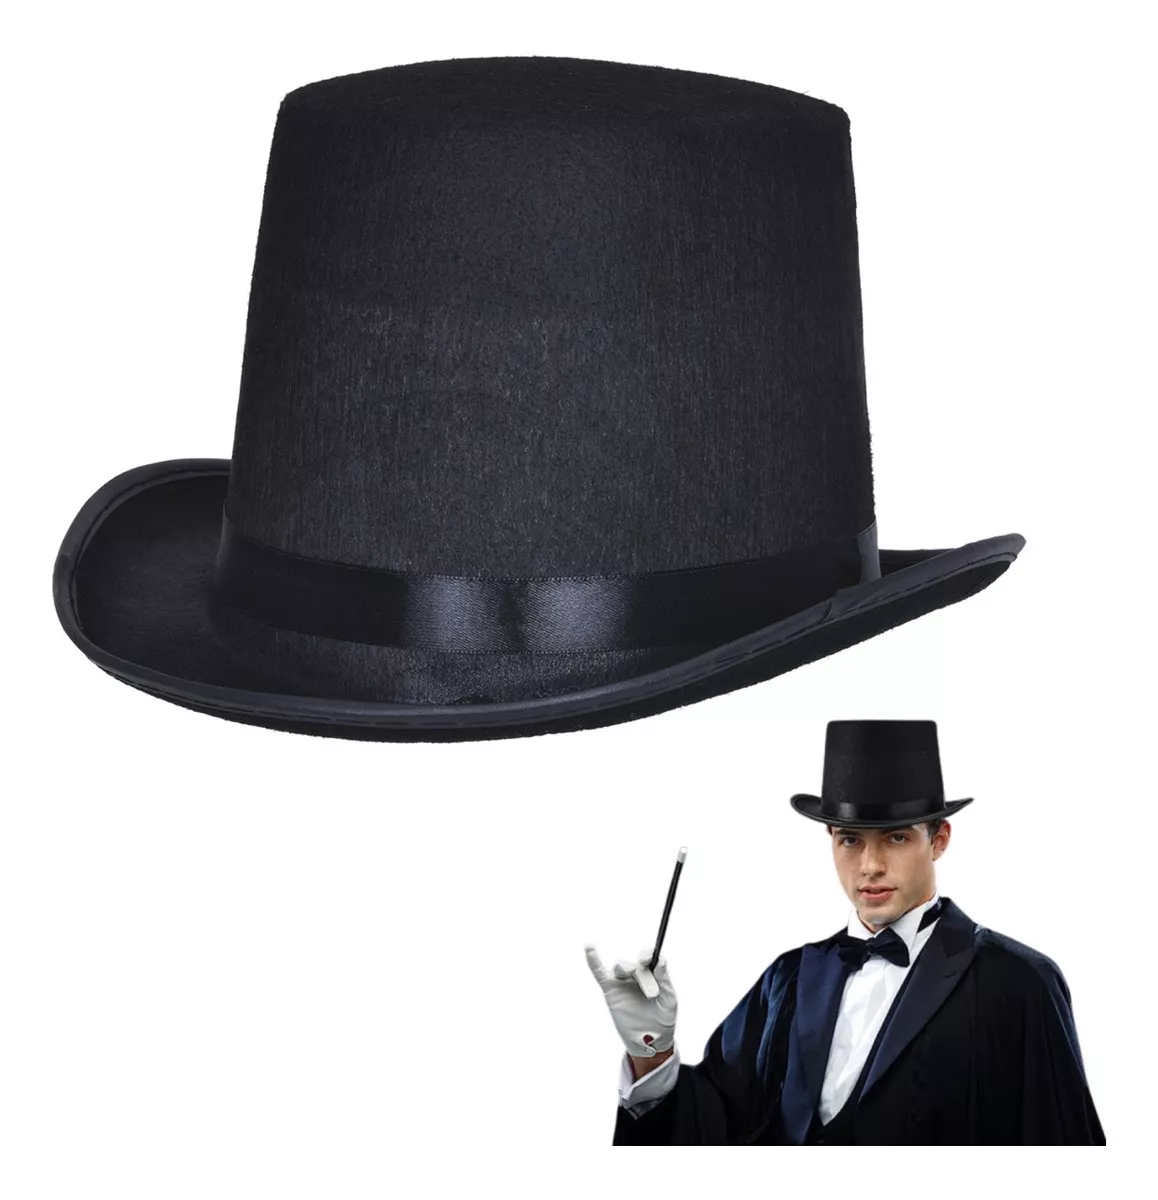 Tercera imagen para búsqueda de sombrero negro